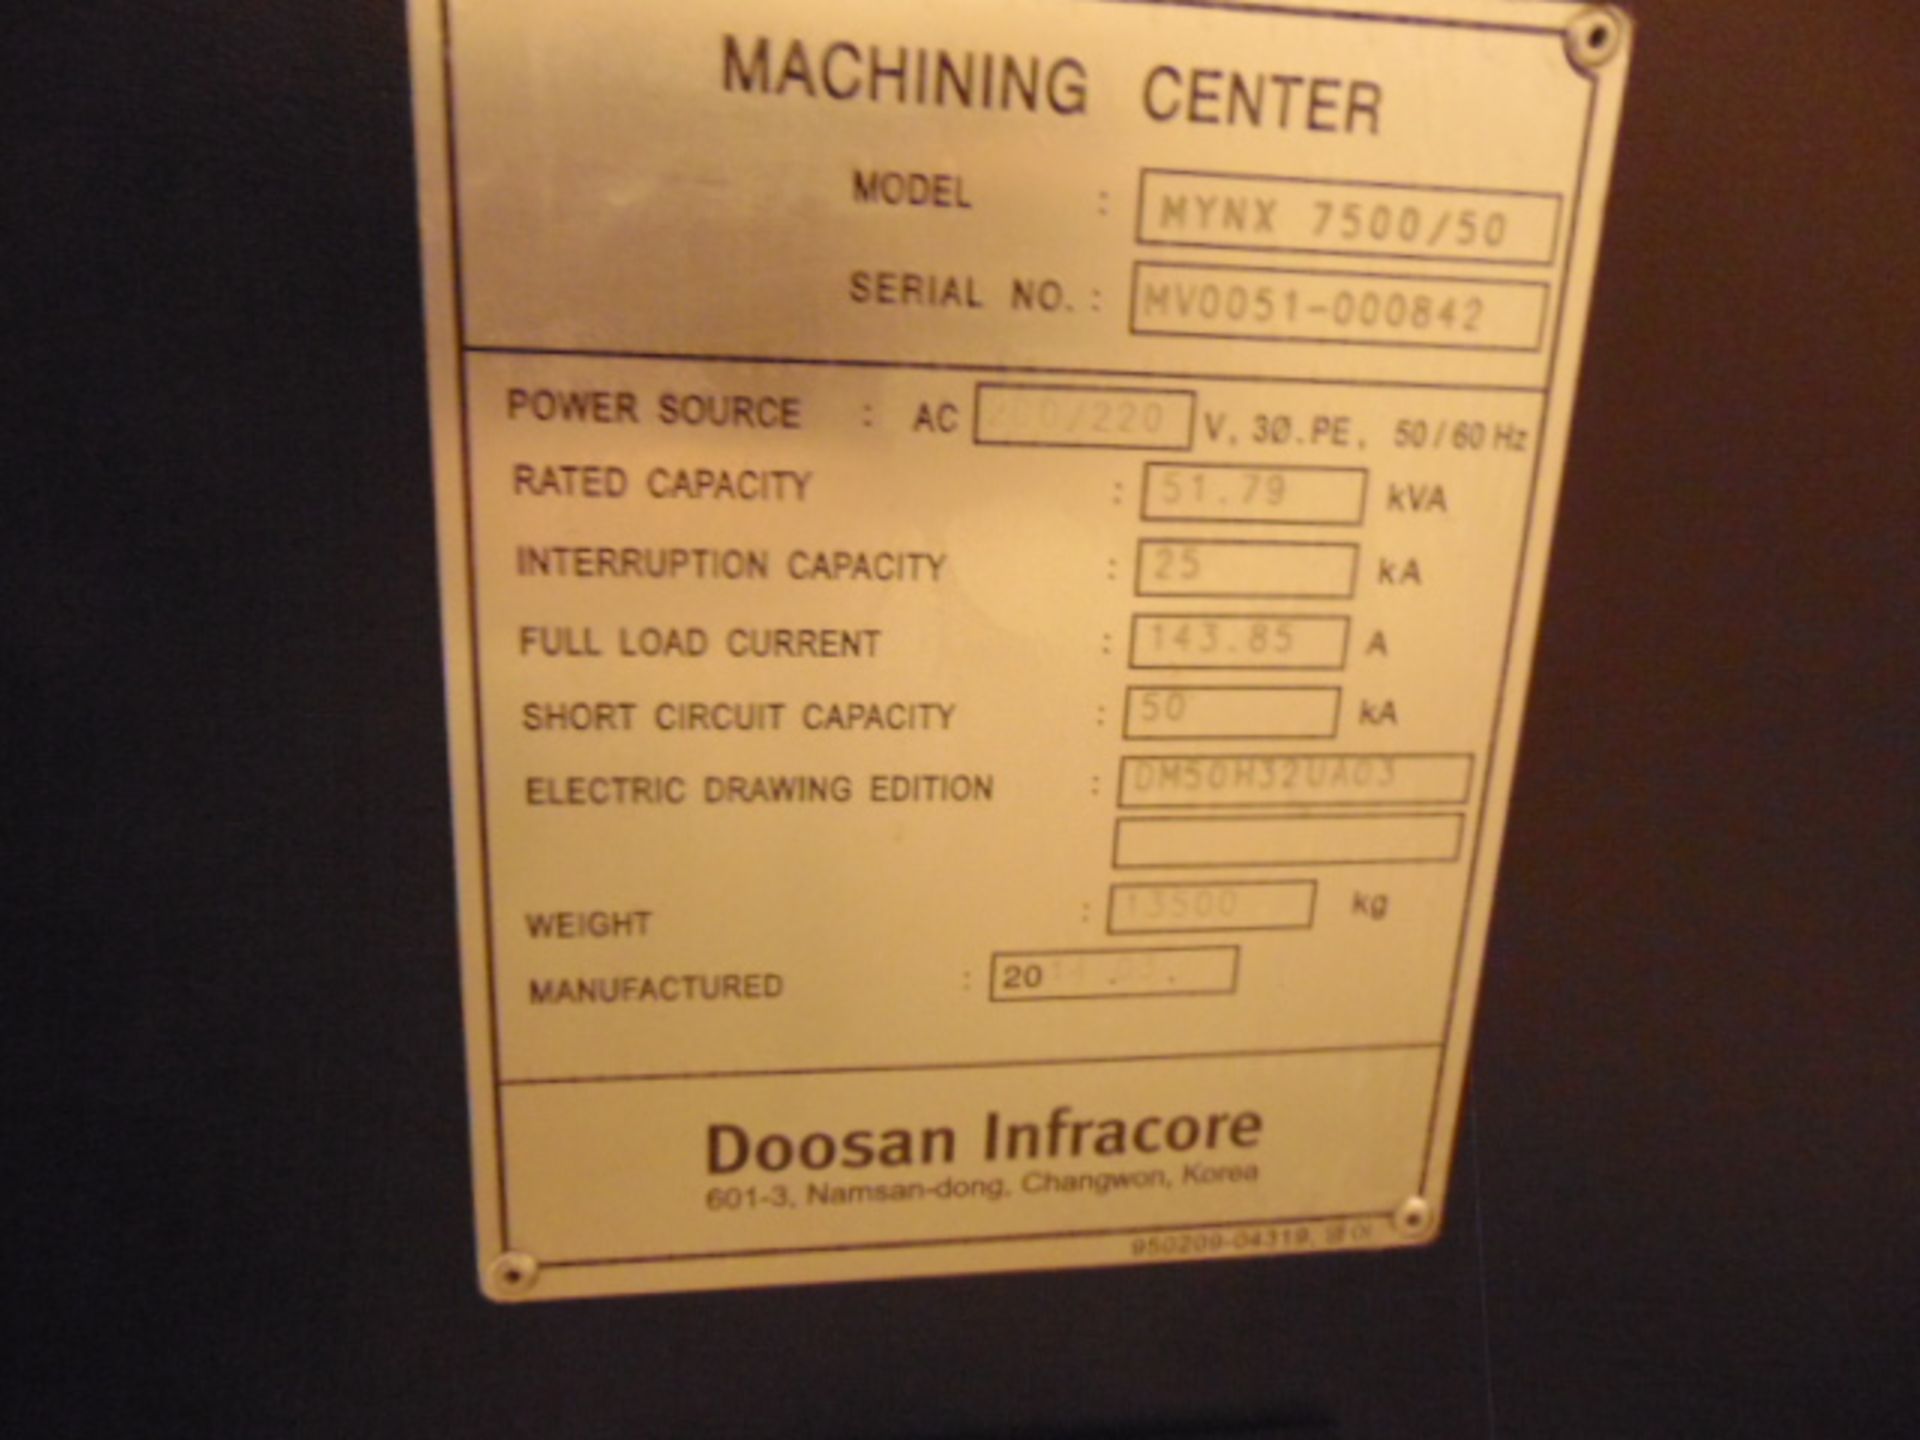 CNC VERTICAL MACHINING CENTER, DOOSAN MYNX MDL. 7500/50 4-AXIS, new 2014, Doosan Fanuc I Series - Image 14 of 15